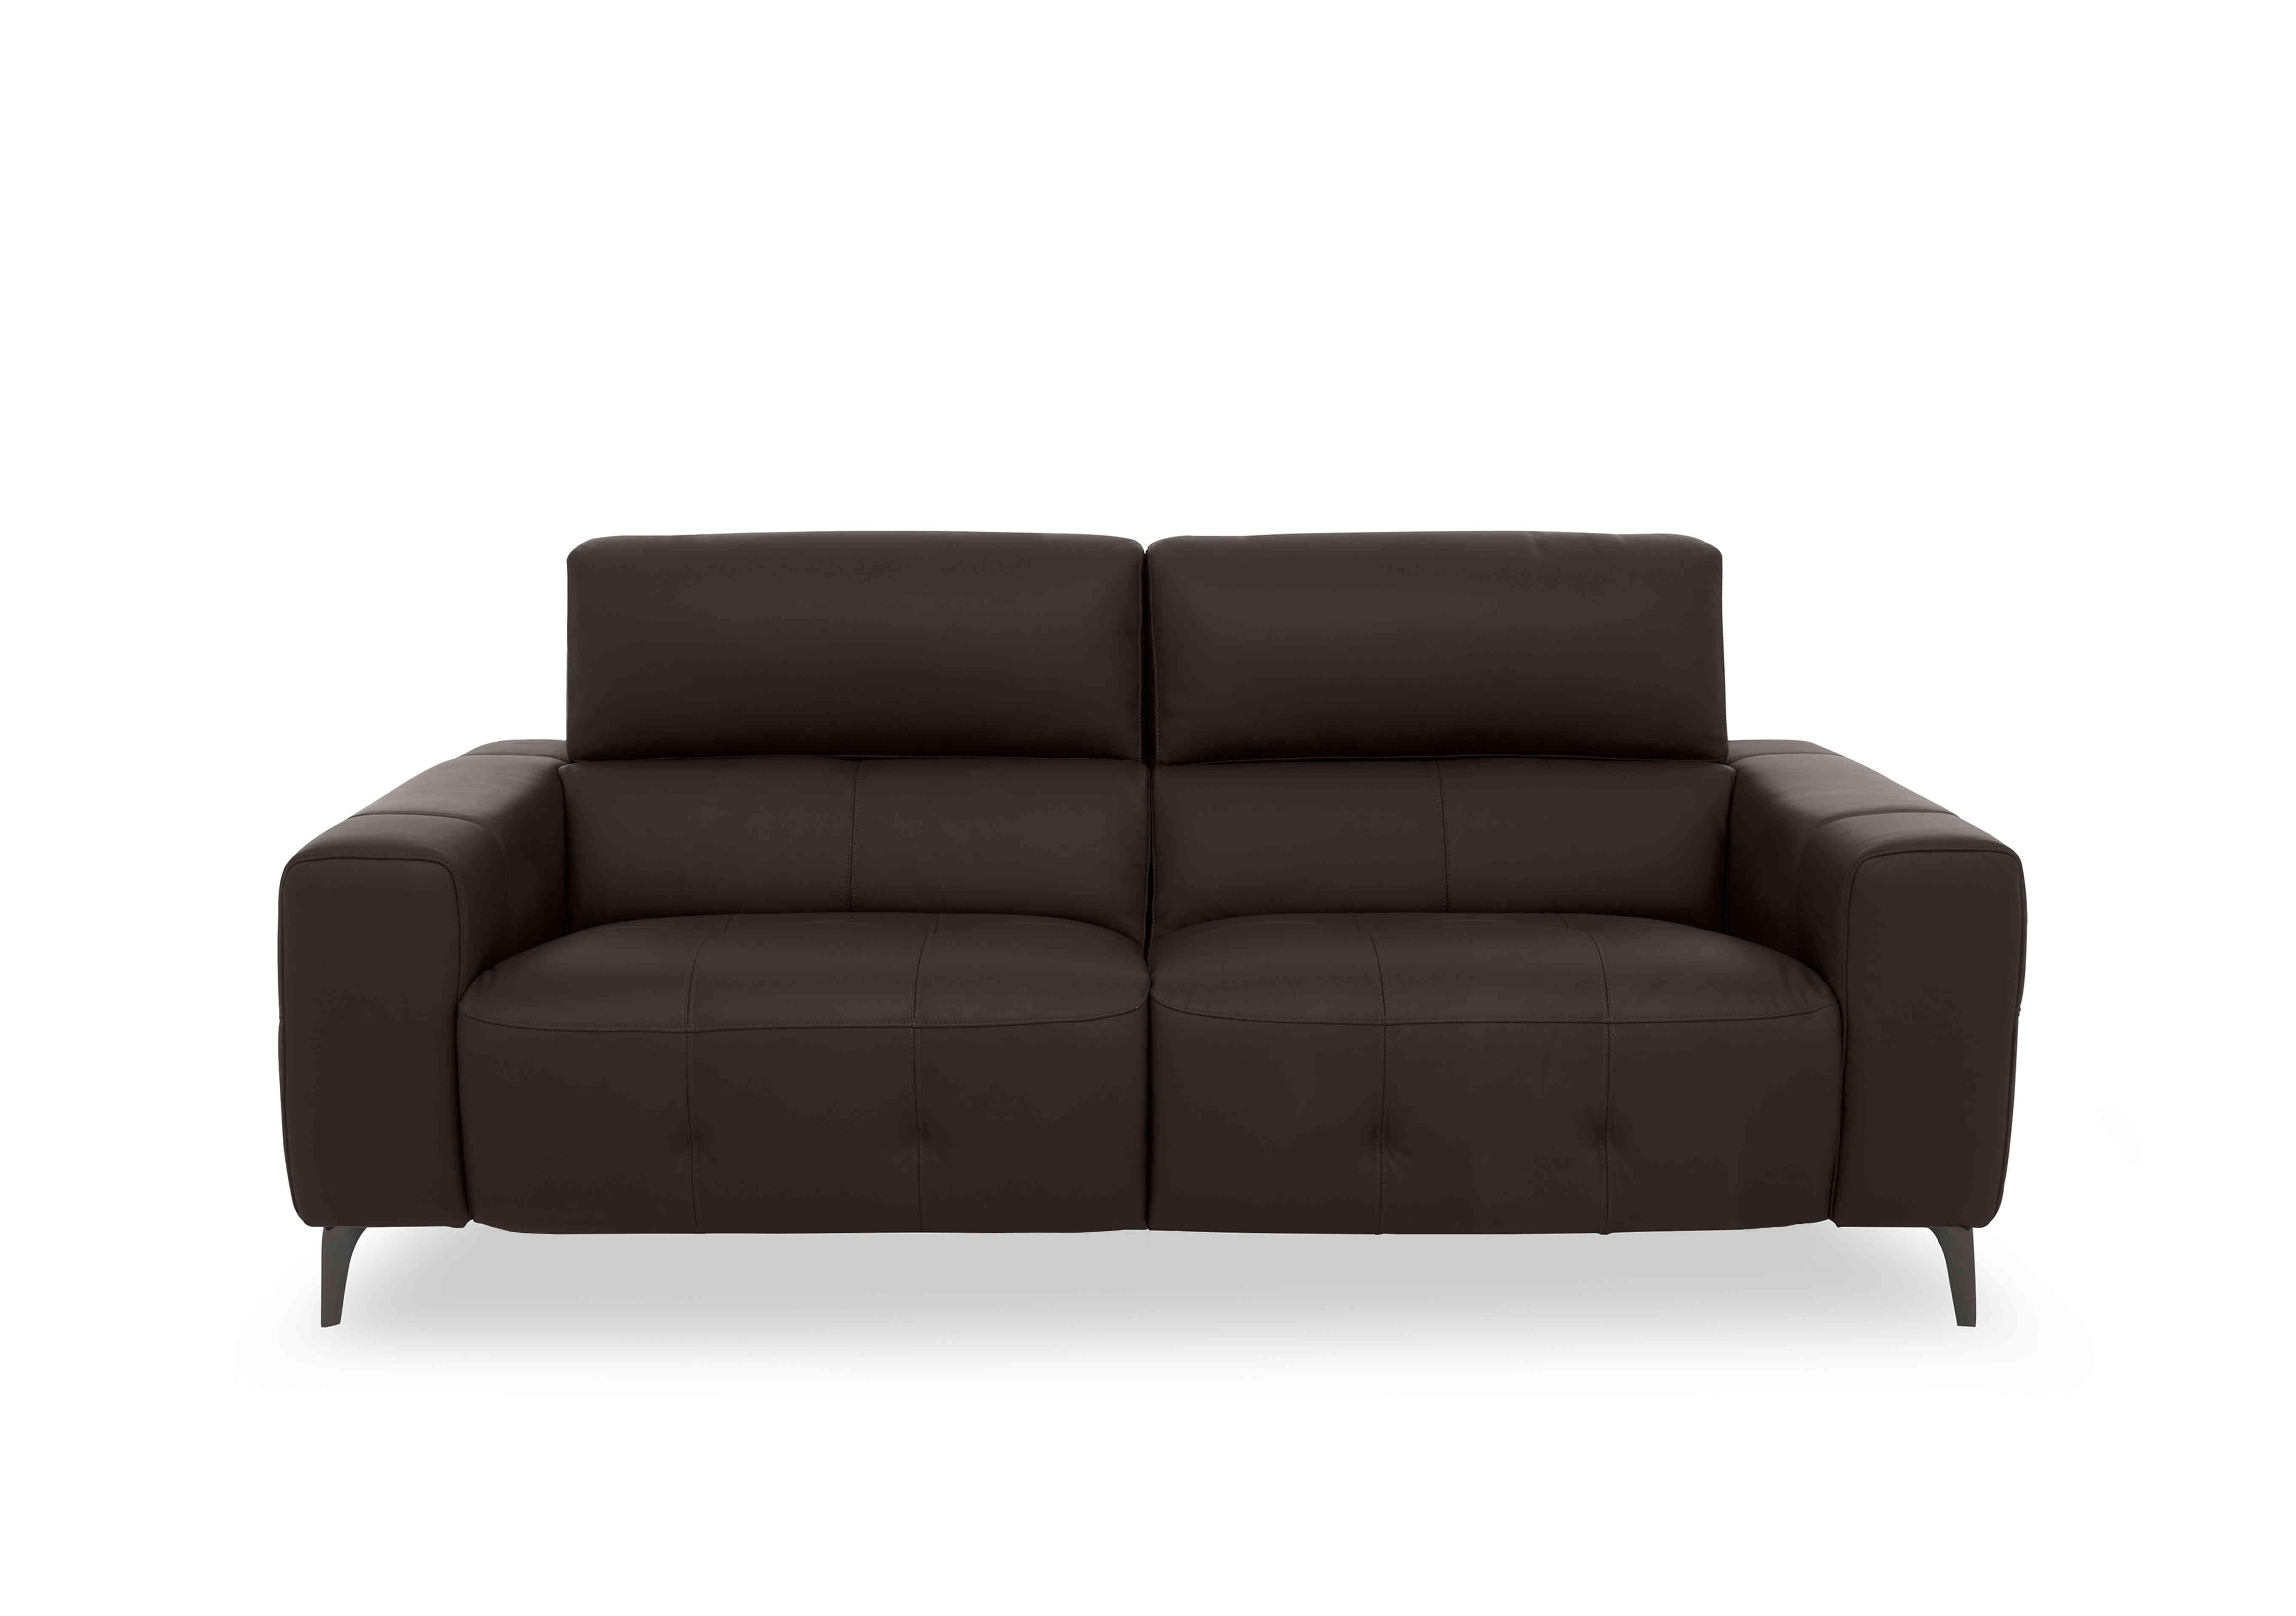 New York 3 Seater Leather Sofa in Bv-1748 Dark Chocolate on Furniture Village